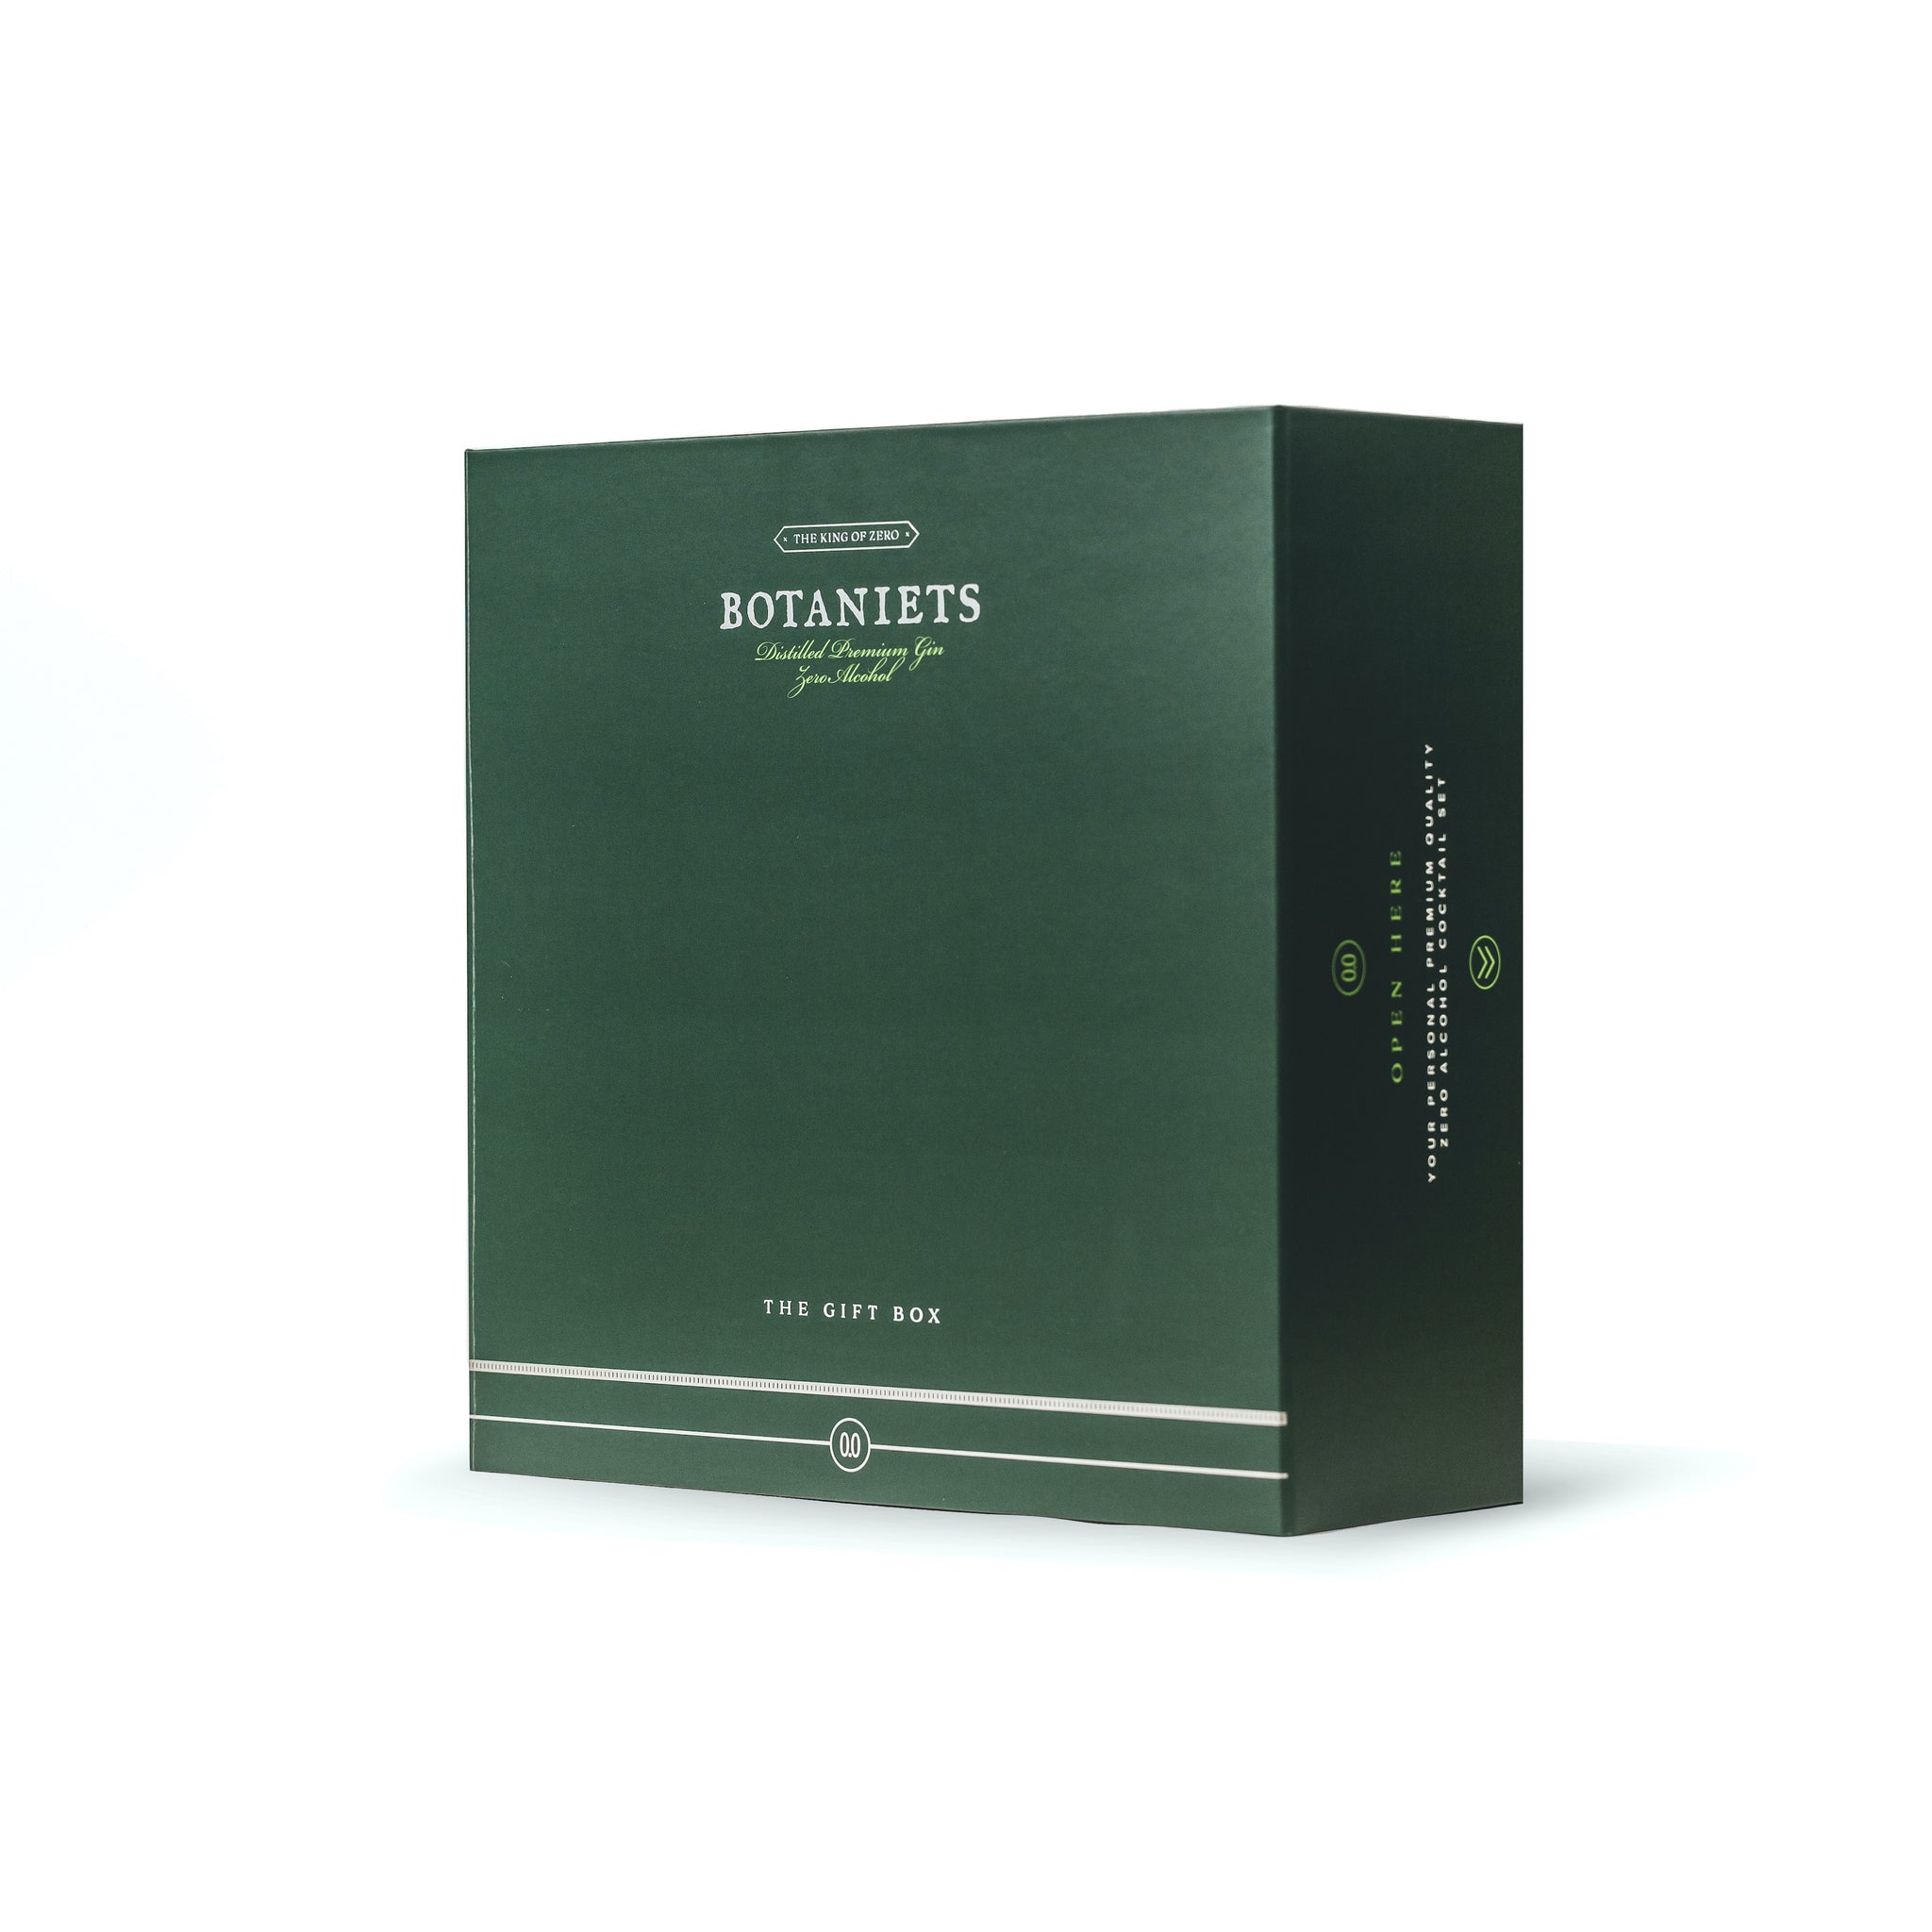 Botaniets Original 0.0% 50 cl - Luxury Gift Box